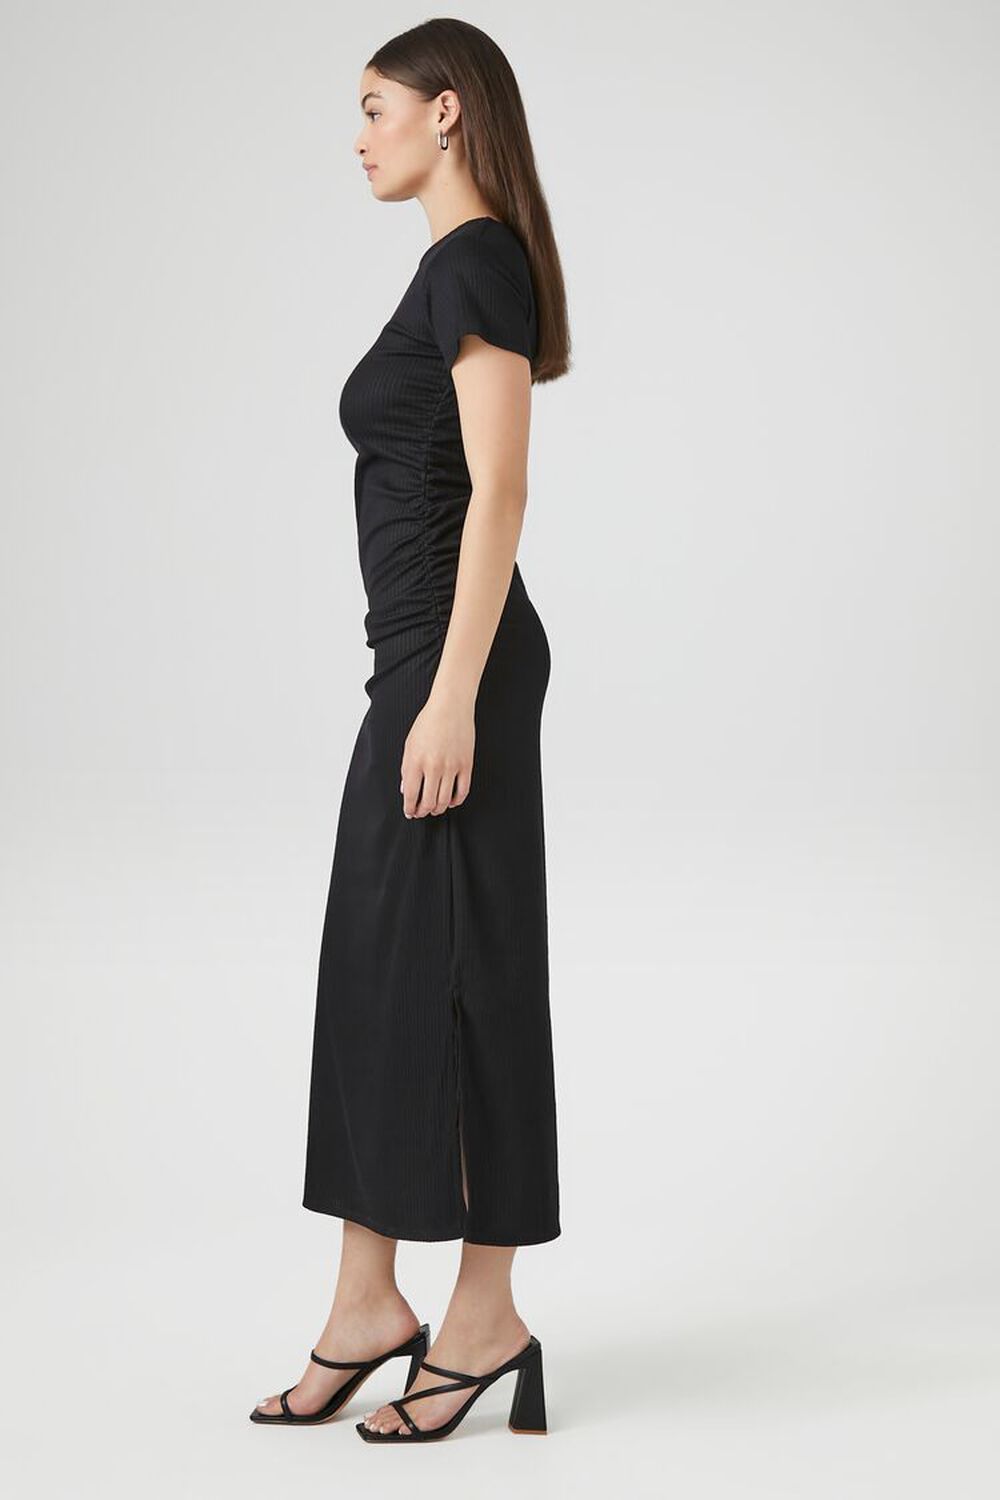 BLACK Ruched Maxi T-Shirt Dress, image 2